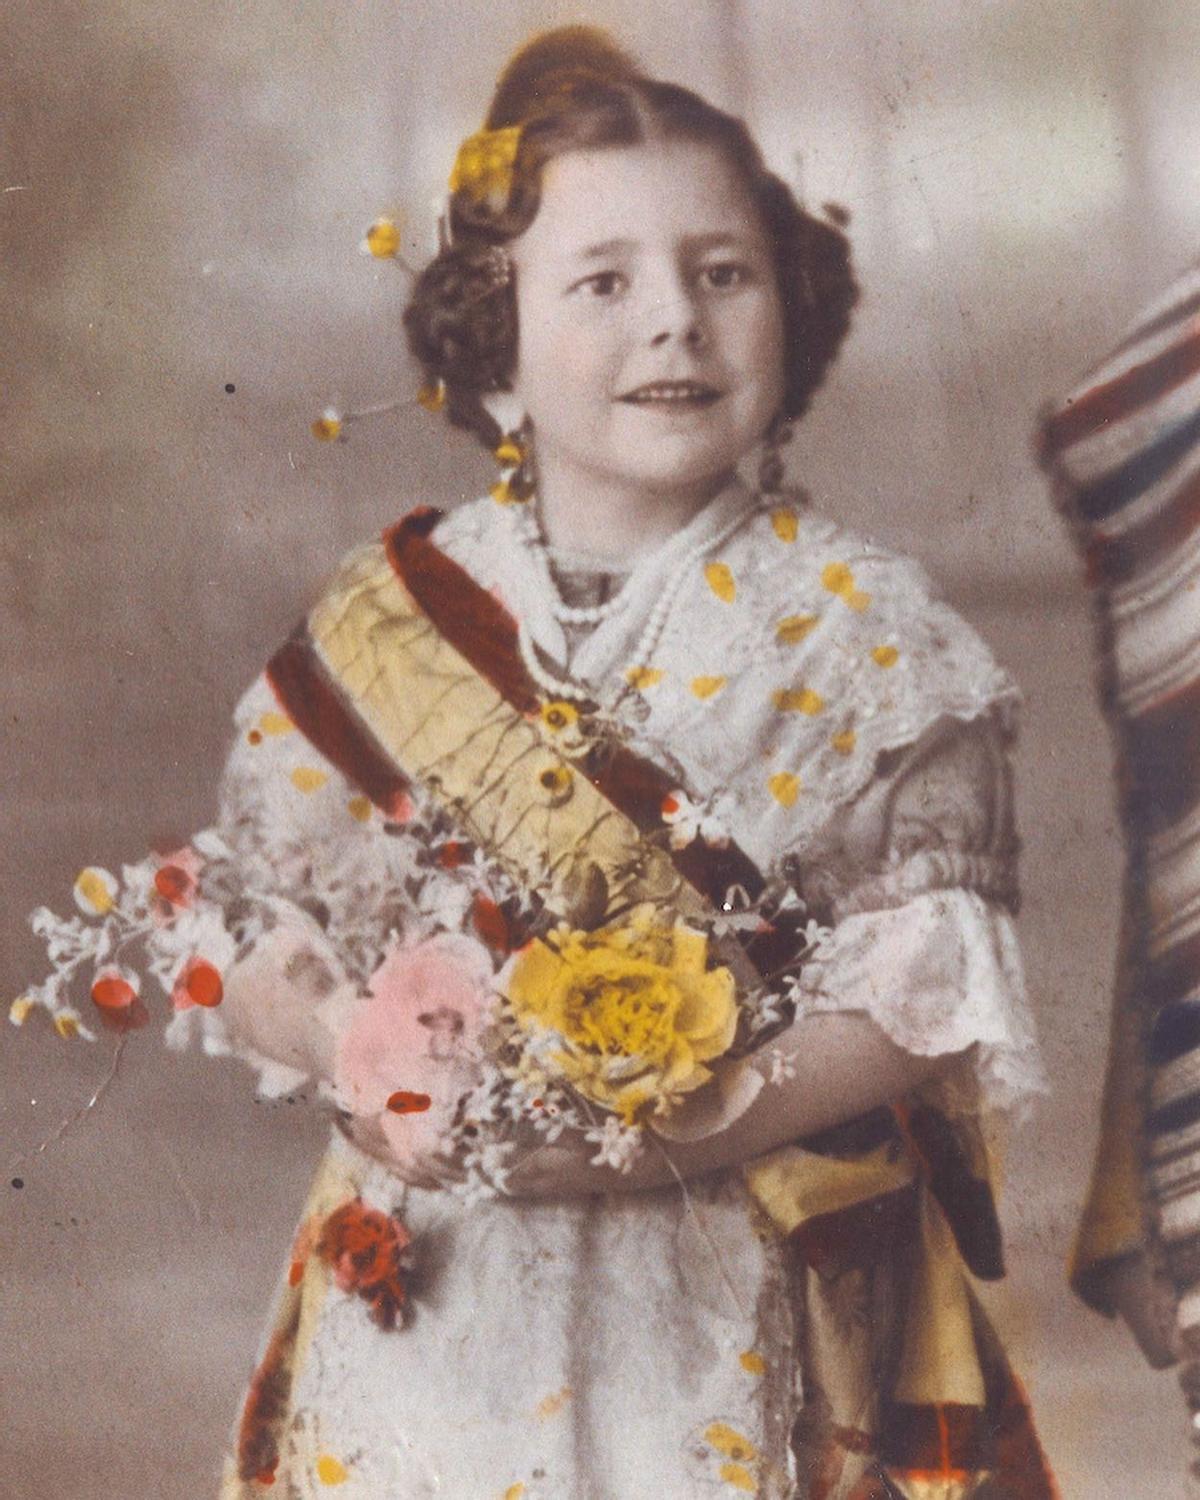 Foto oficial de Pepa, como fallera mayor de 1942